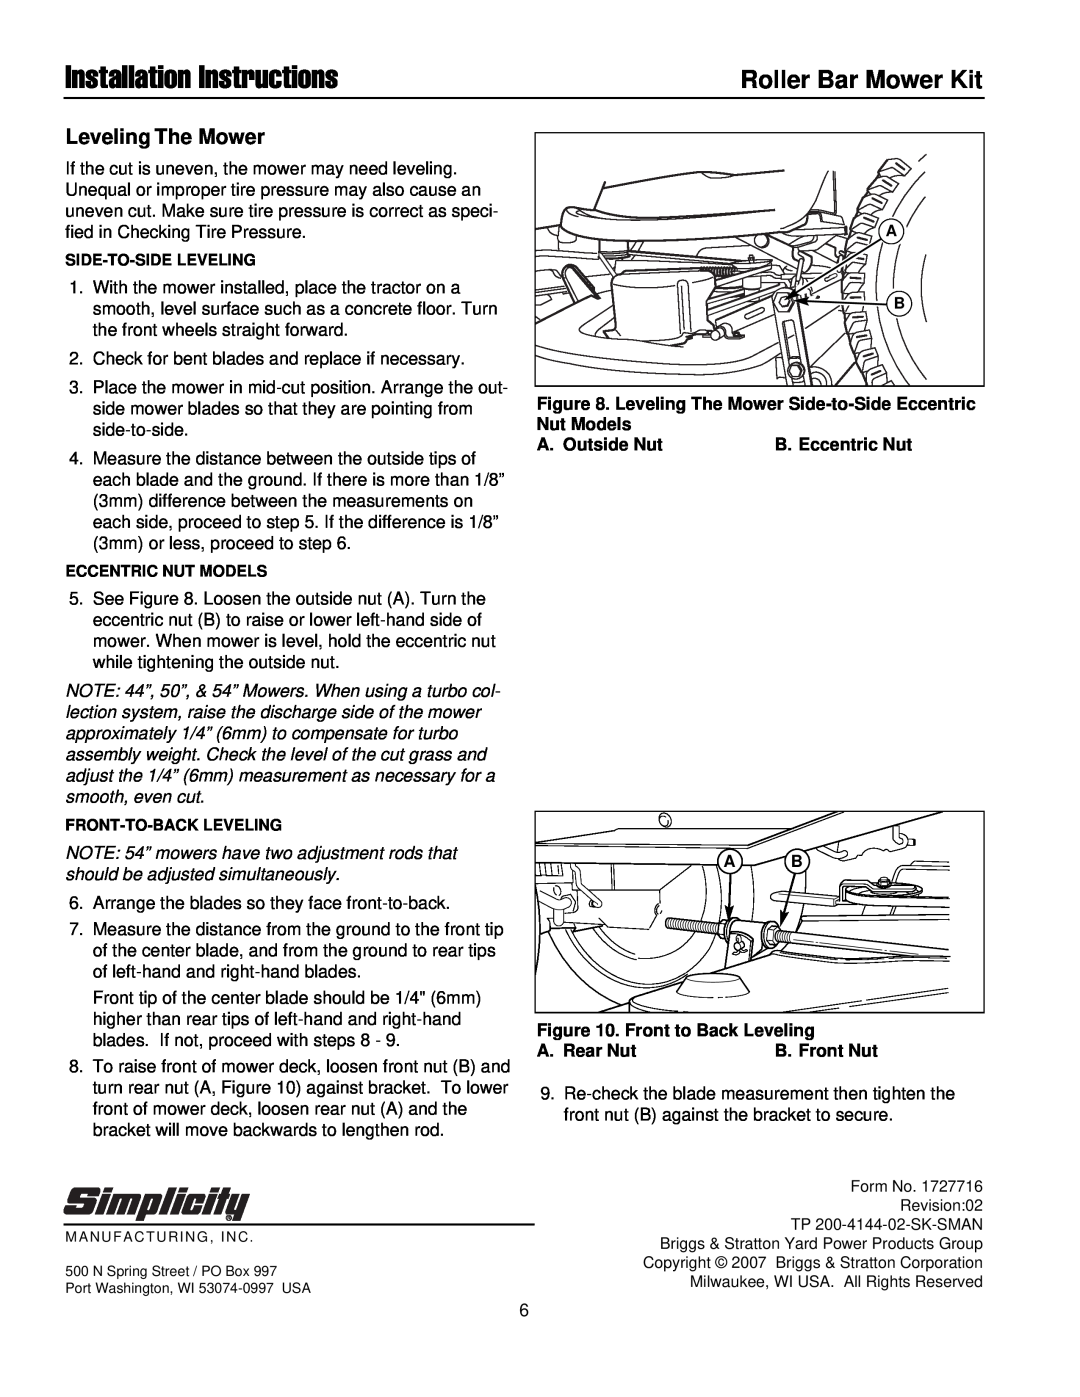 Briggs & Stratton 1687077 installation instructions Leveling The Mower, Installation Instructions, Roller Bar Mower Kit 